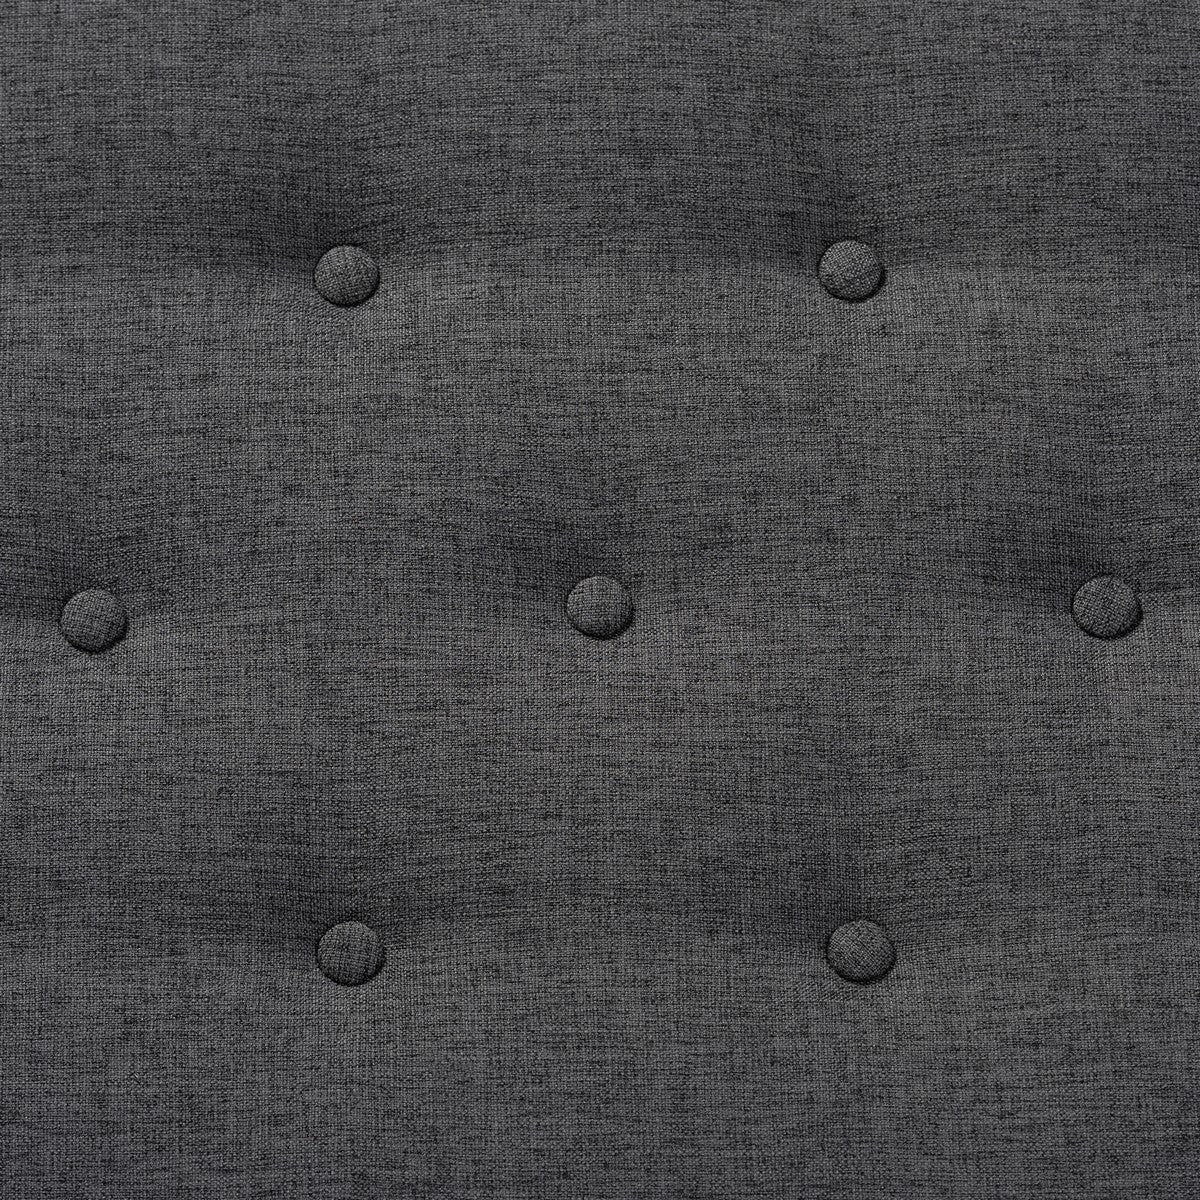 Baxton Studio Arne Mid-Century Modern Dark Grey Fabric Upholstered Walnut Finished Bench